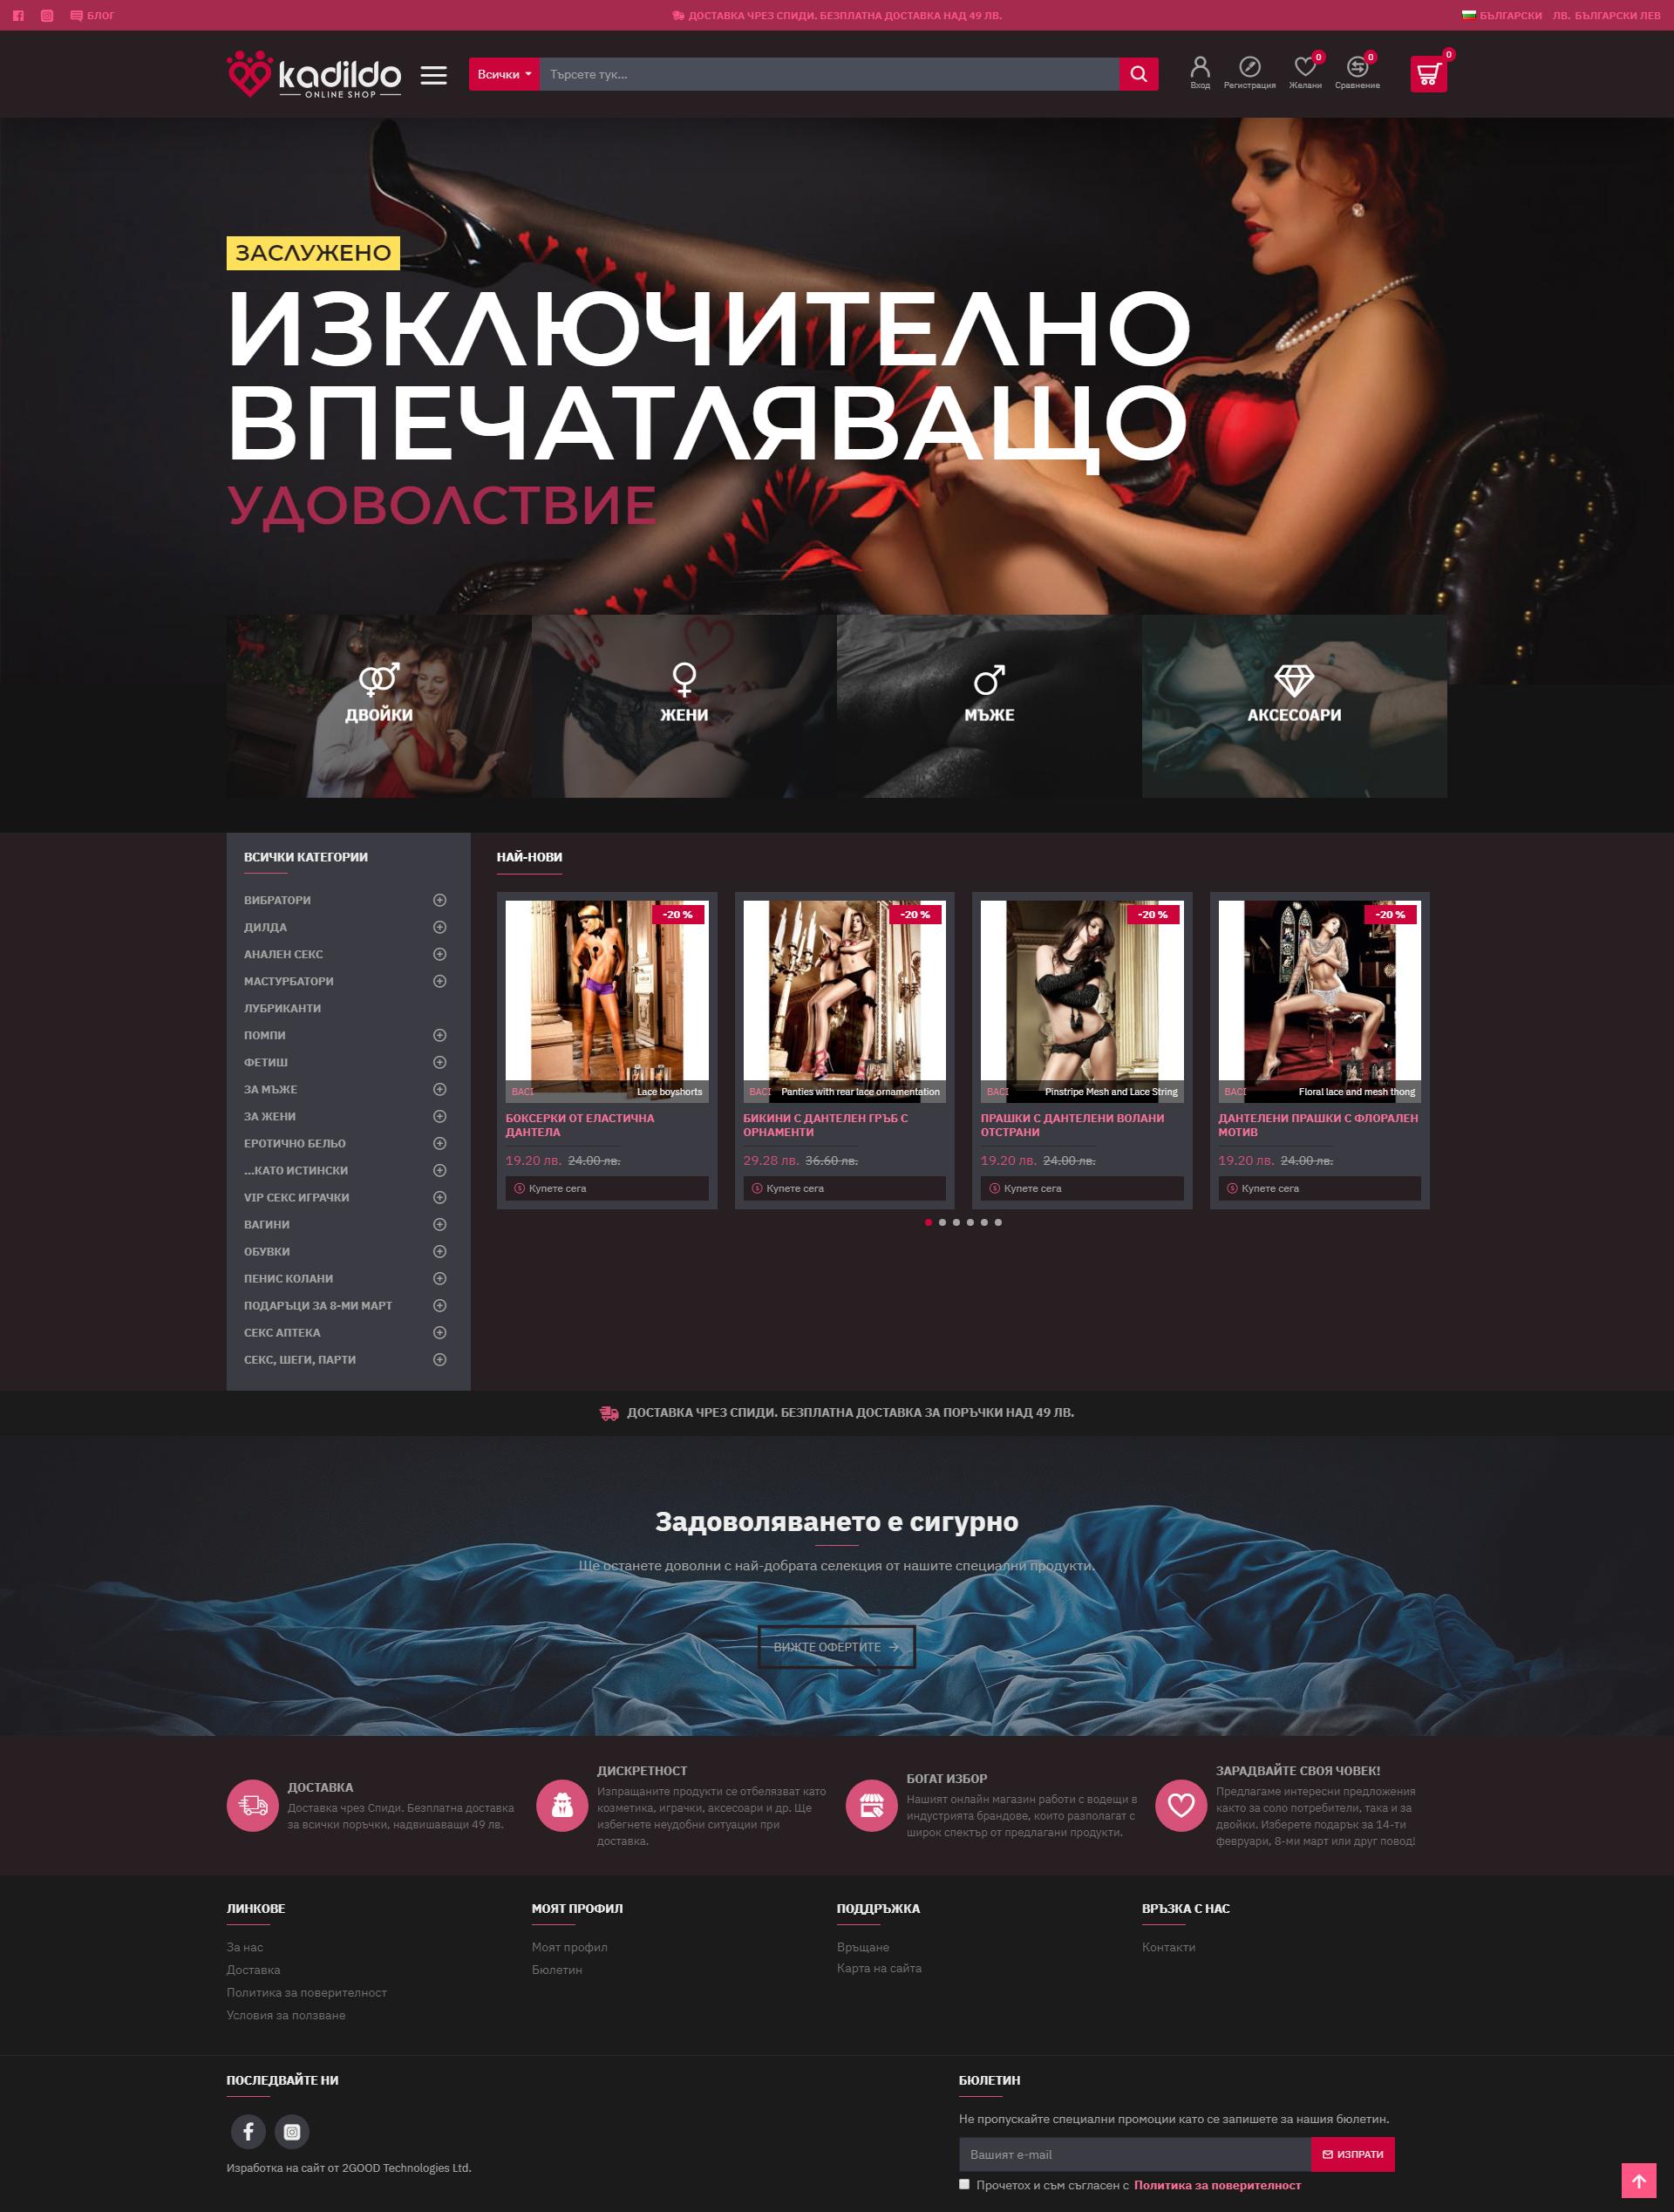 KaDildo.com - еротичен онлайн магазин